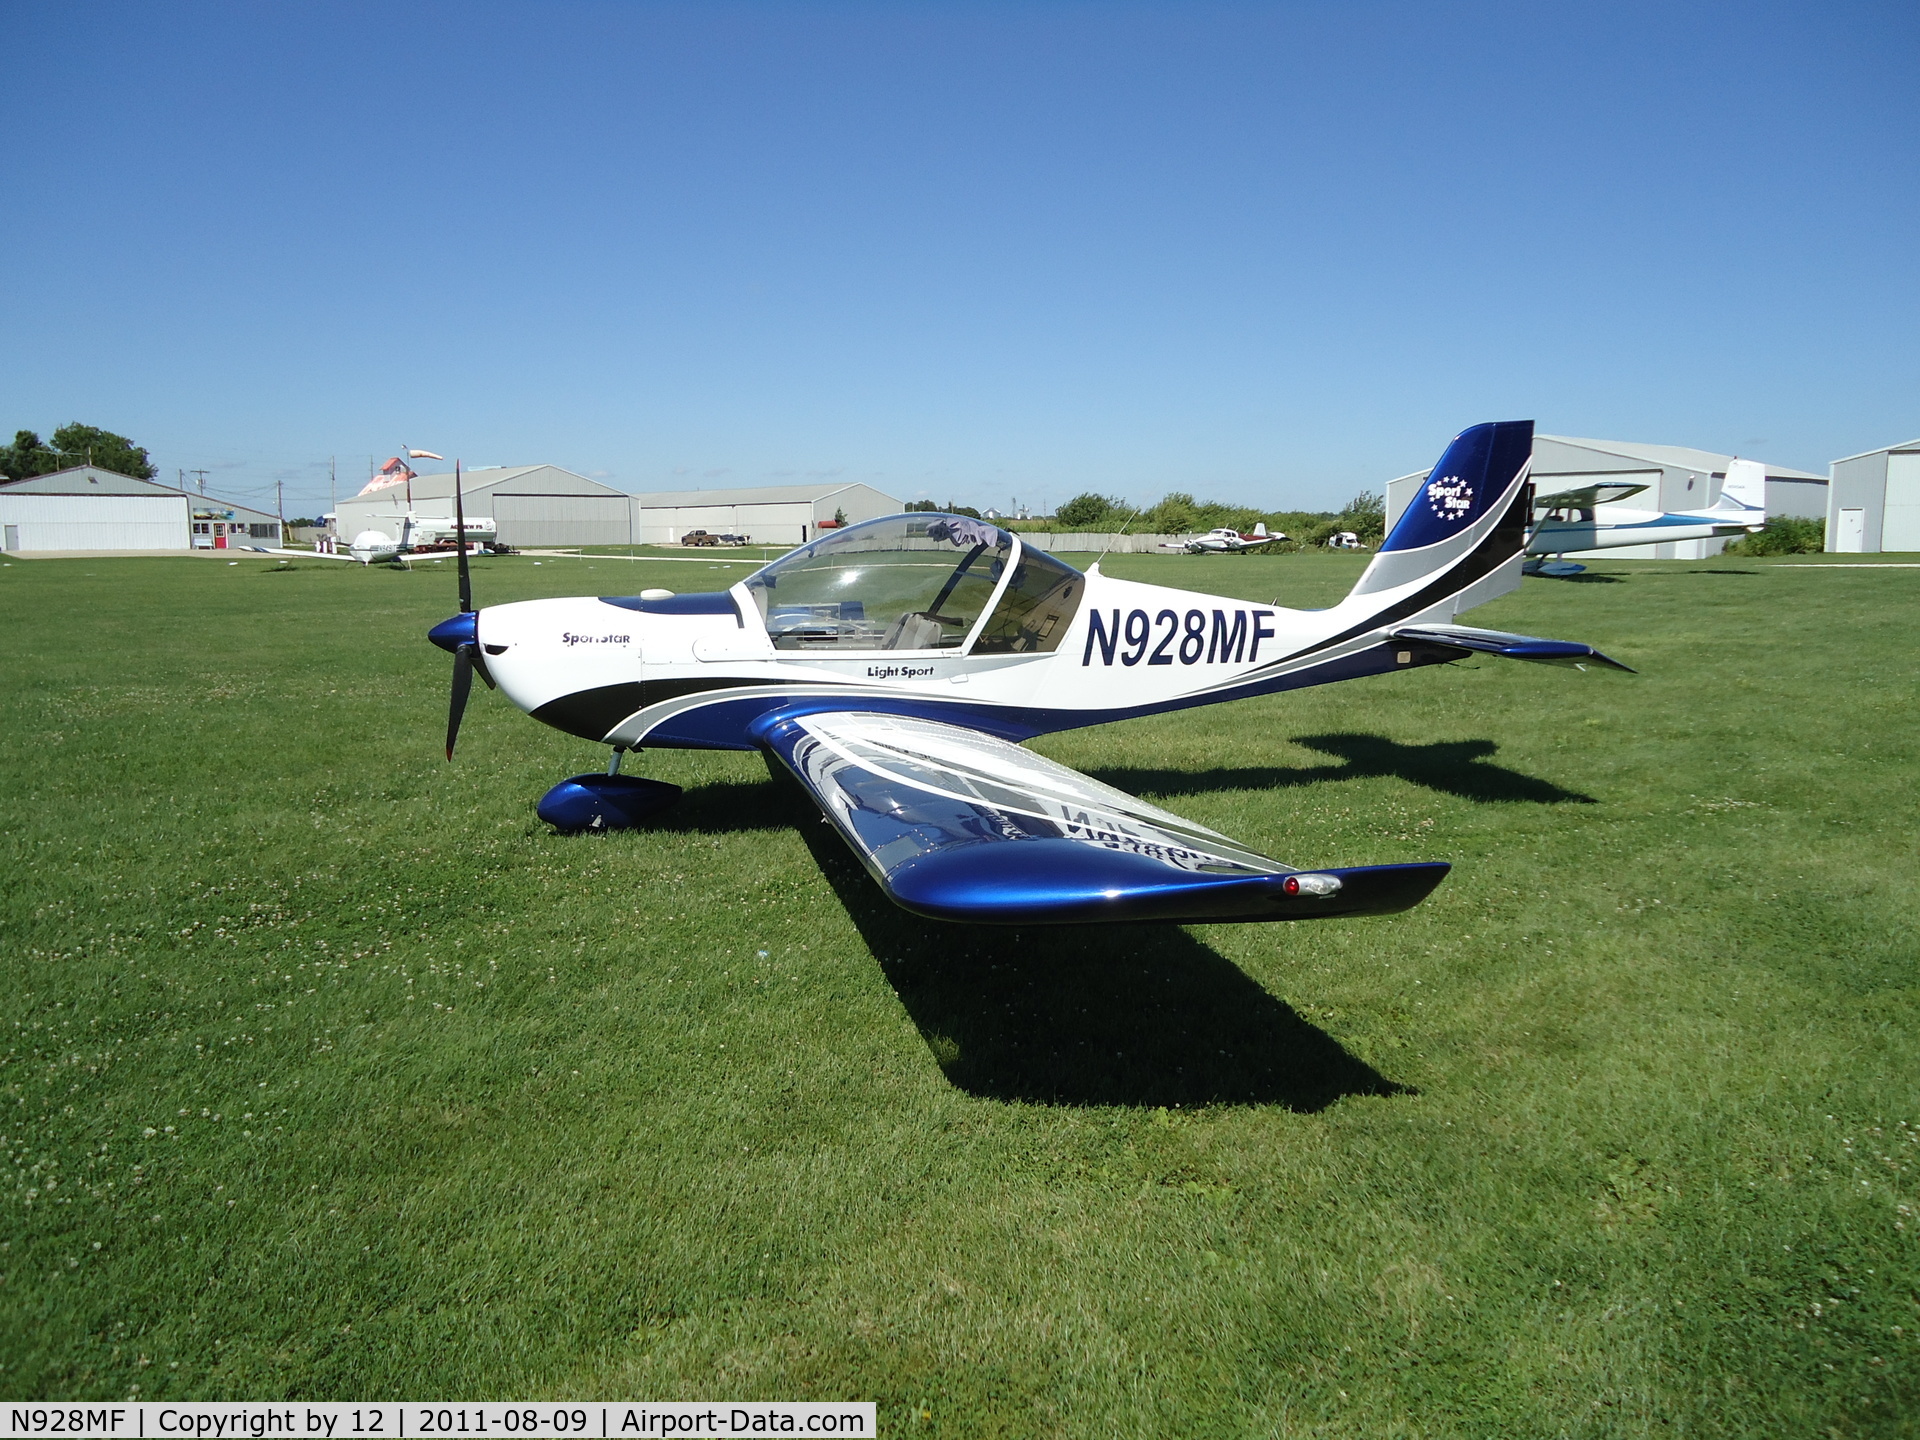 N928MF, 2007 Evektor-Aerotechnik Sportstar Plus C/N 20070928, at cushing field, Newark, IL